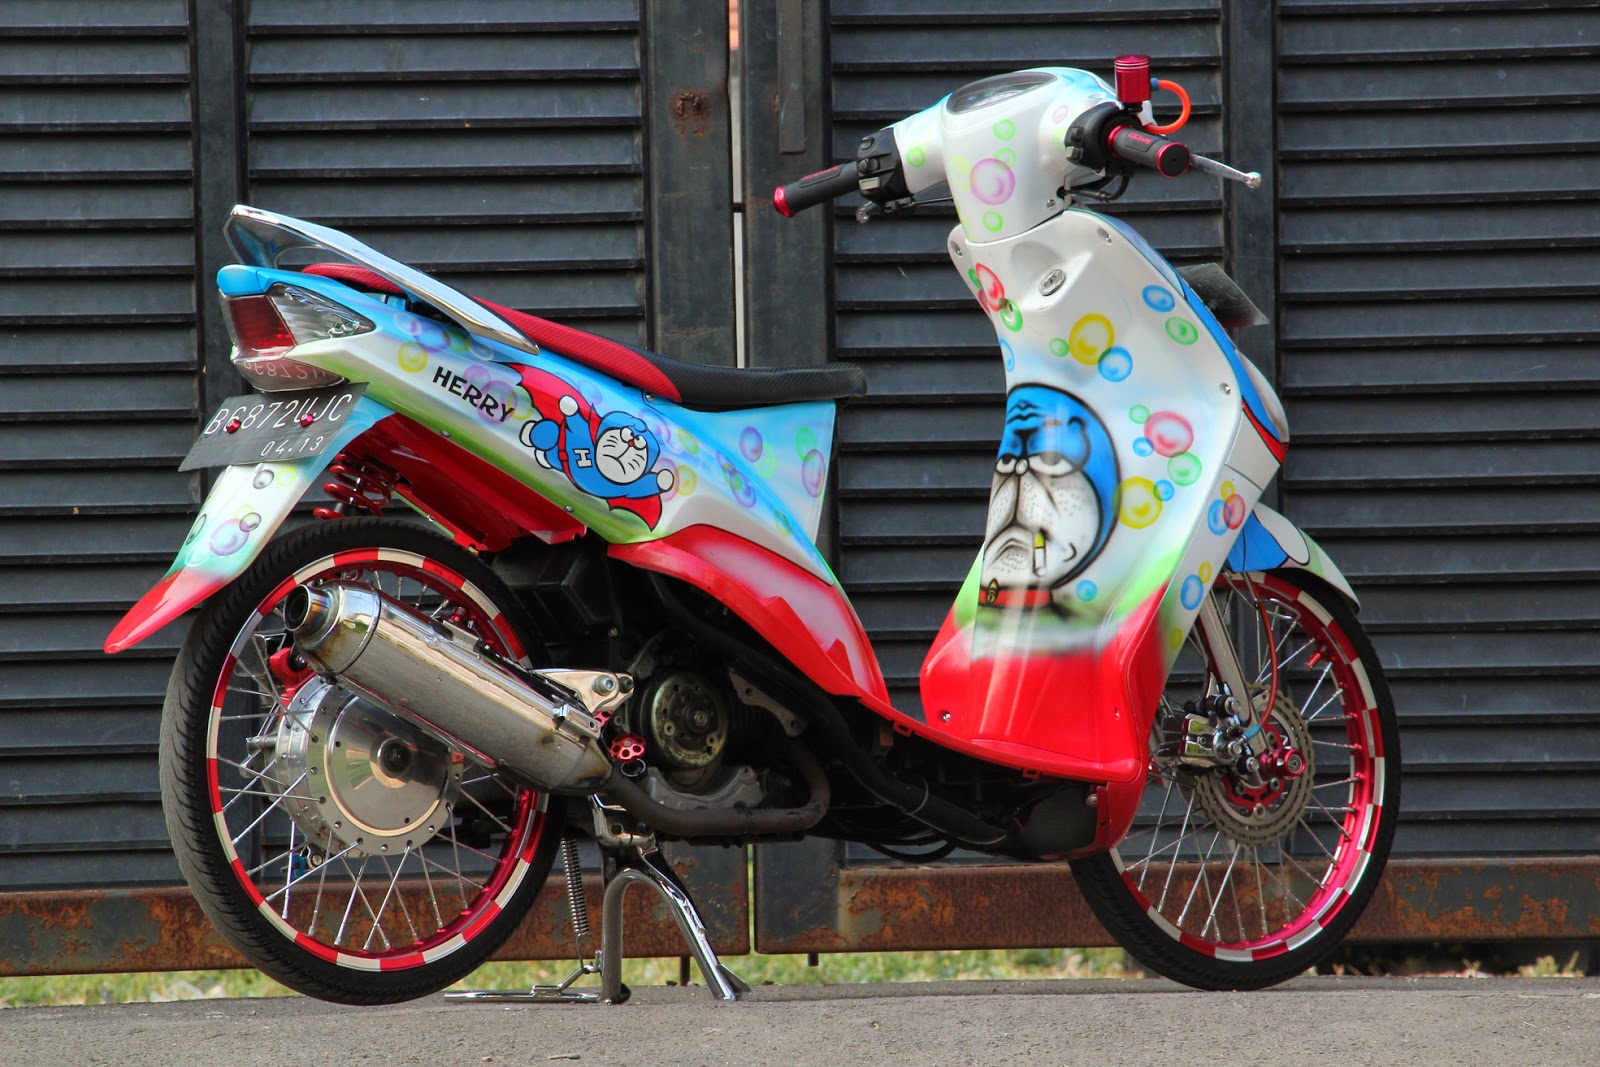 2 Sosok Doraemon Di Yamaha Mio 2008 Wallpaper Car And Motorcycle